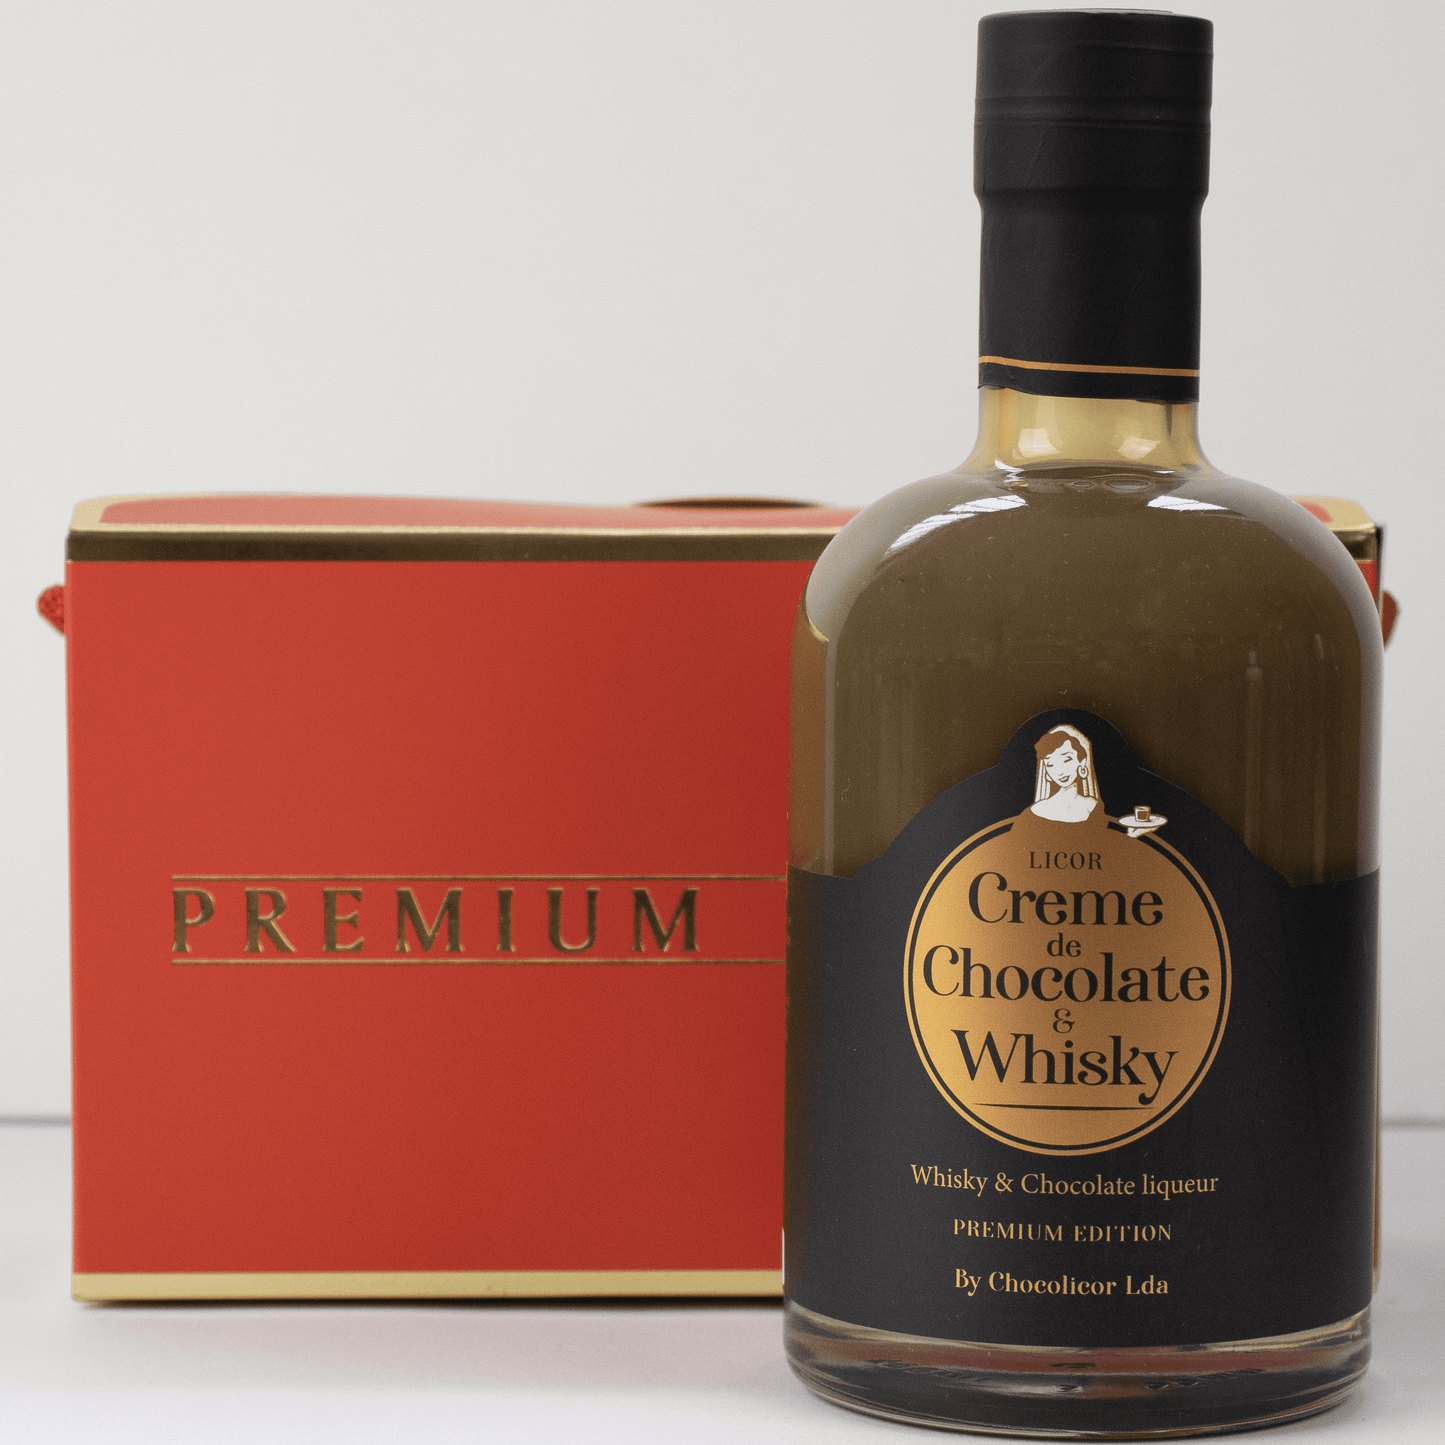 Licor de Chocolate y Whisky Premium